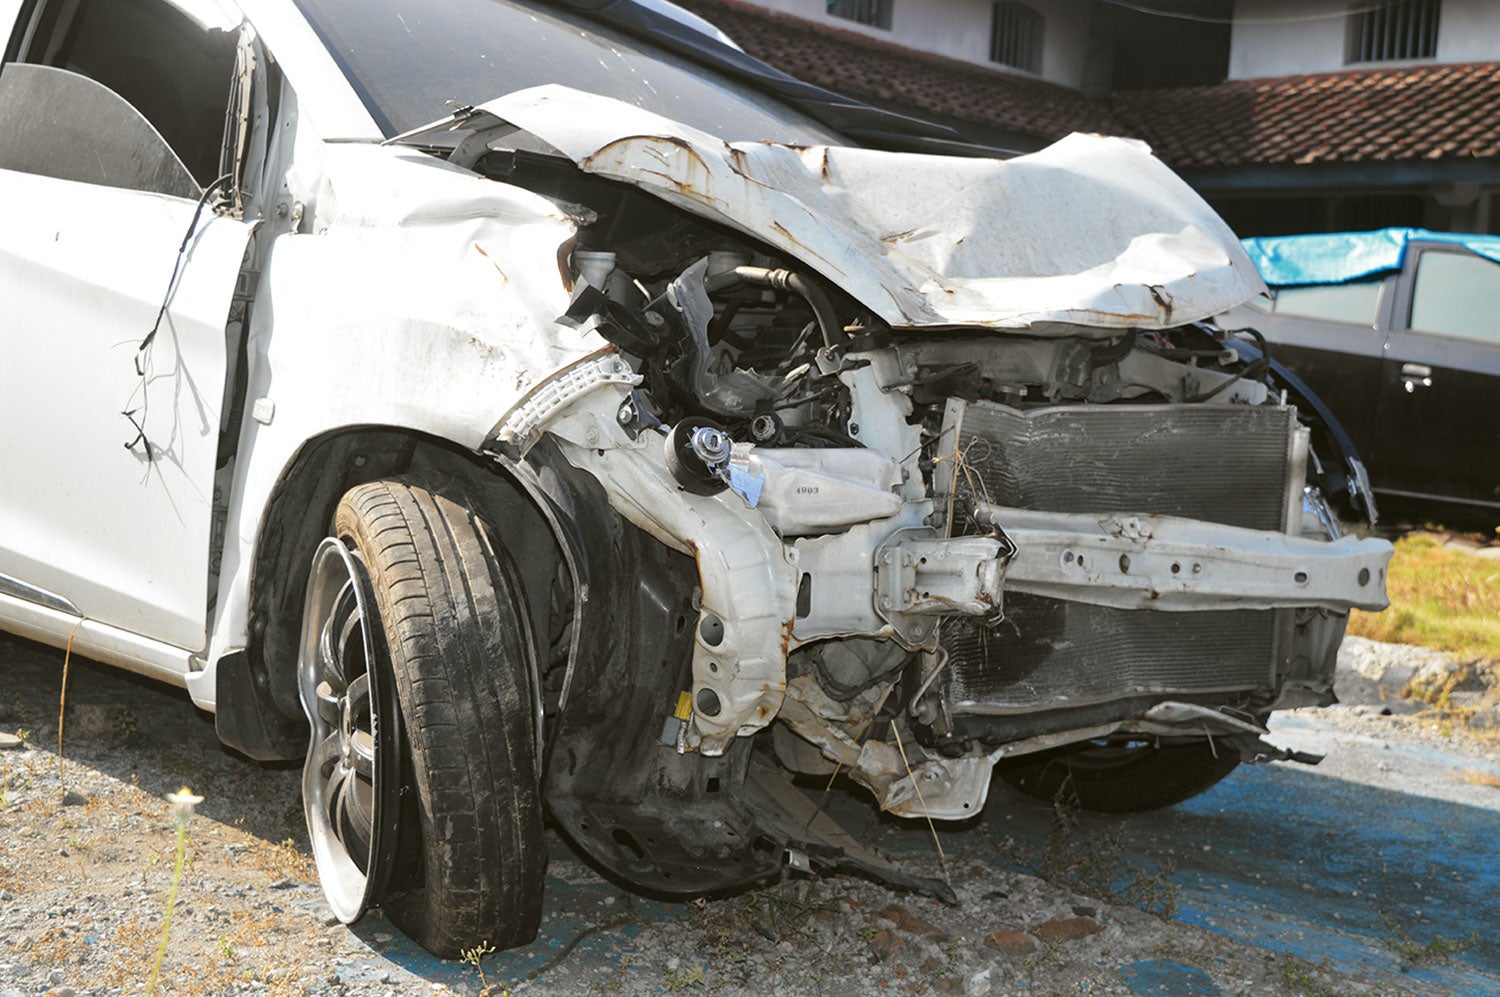 Attorney for Car Accident Injuries - Adequate Compensation - Miami, FL